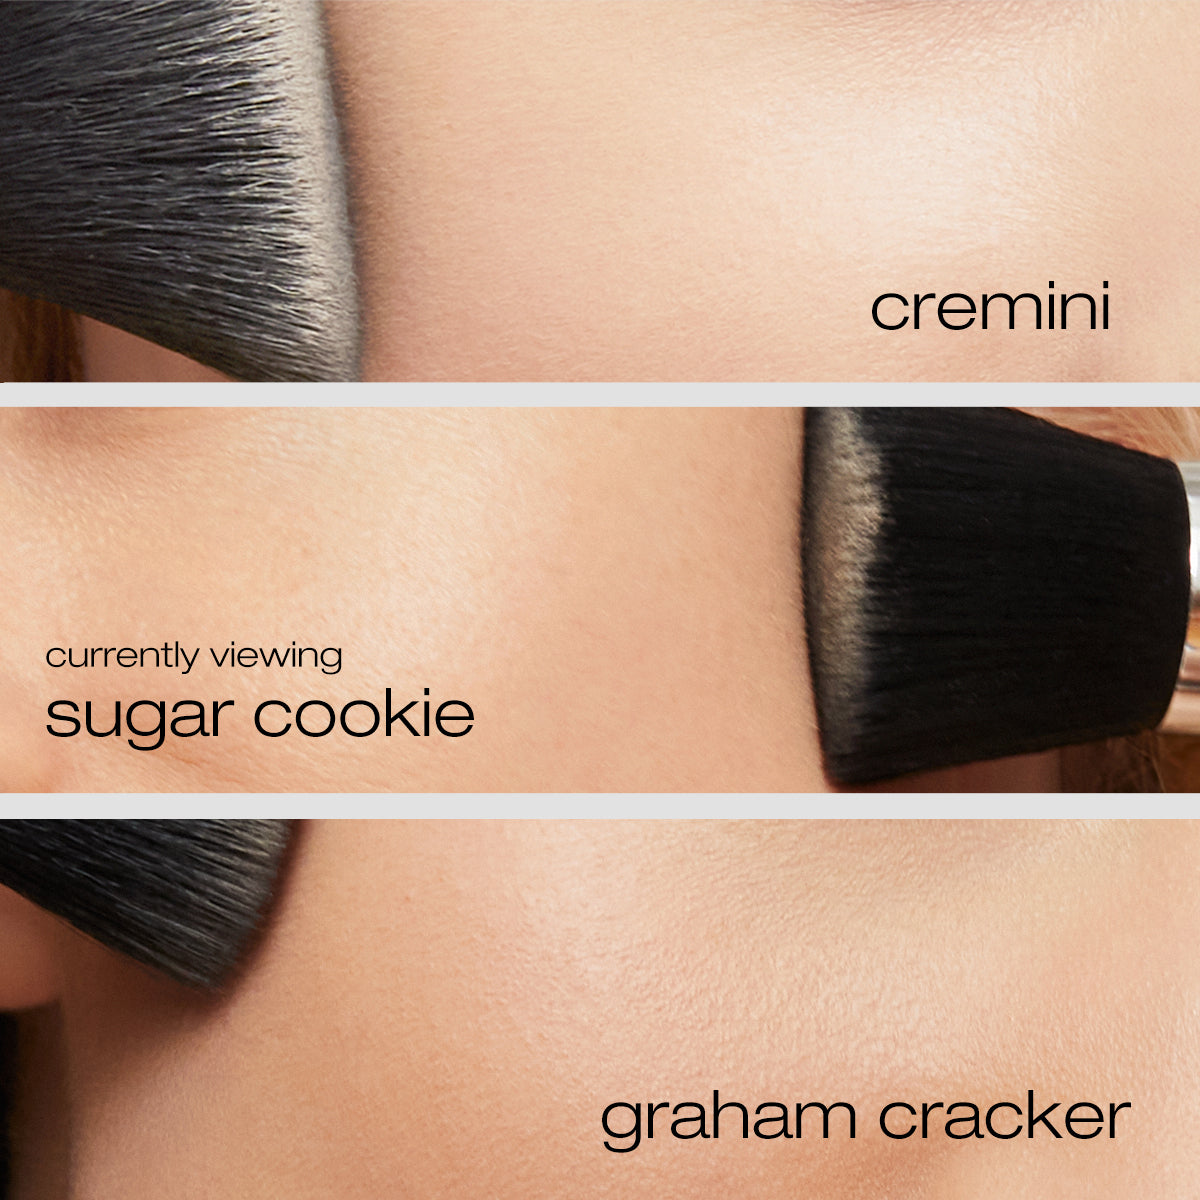 Model applyingsugar cookie, cremini, and graham cracker foundation on cheeks